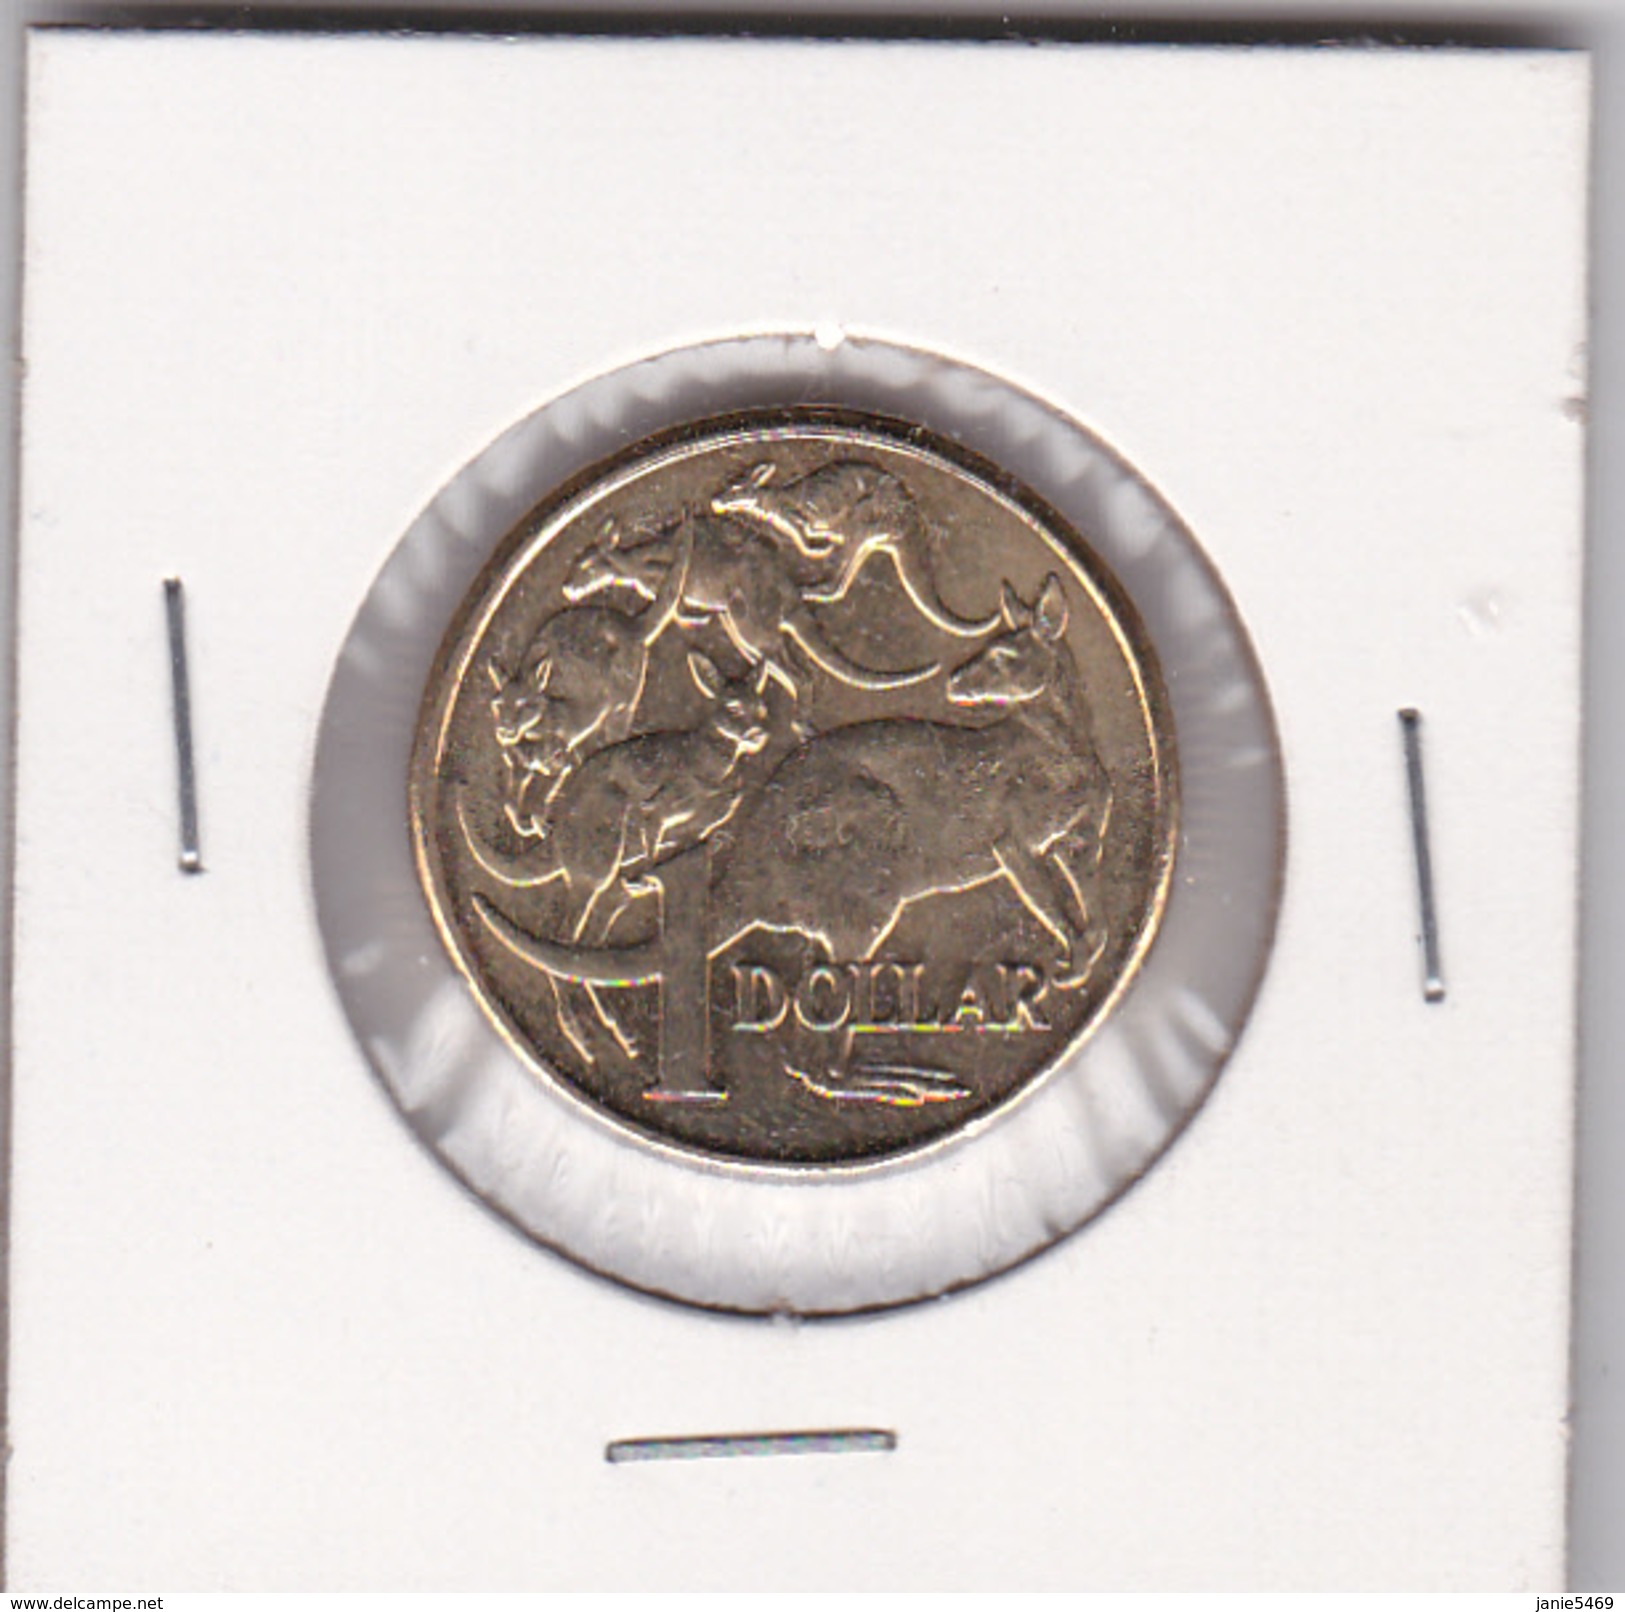 Australia 2016 $ 1.00 Coin - Dollar